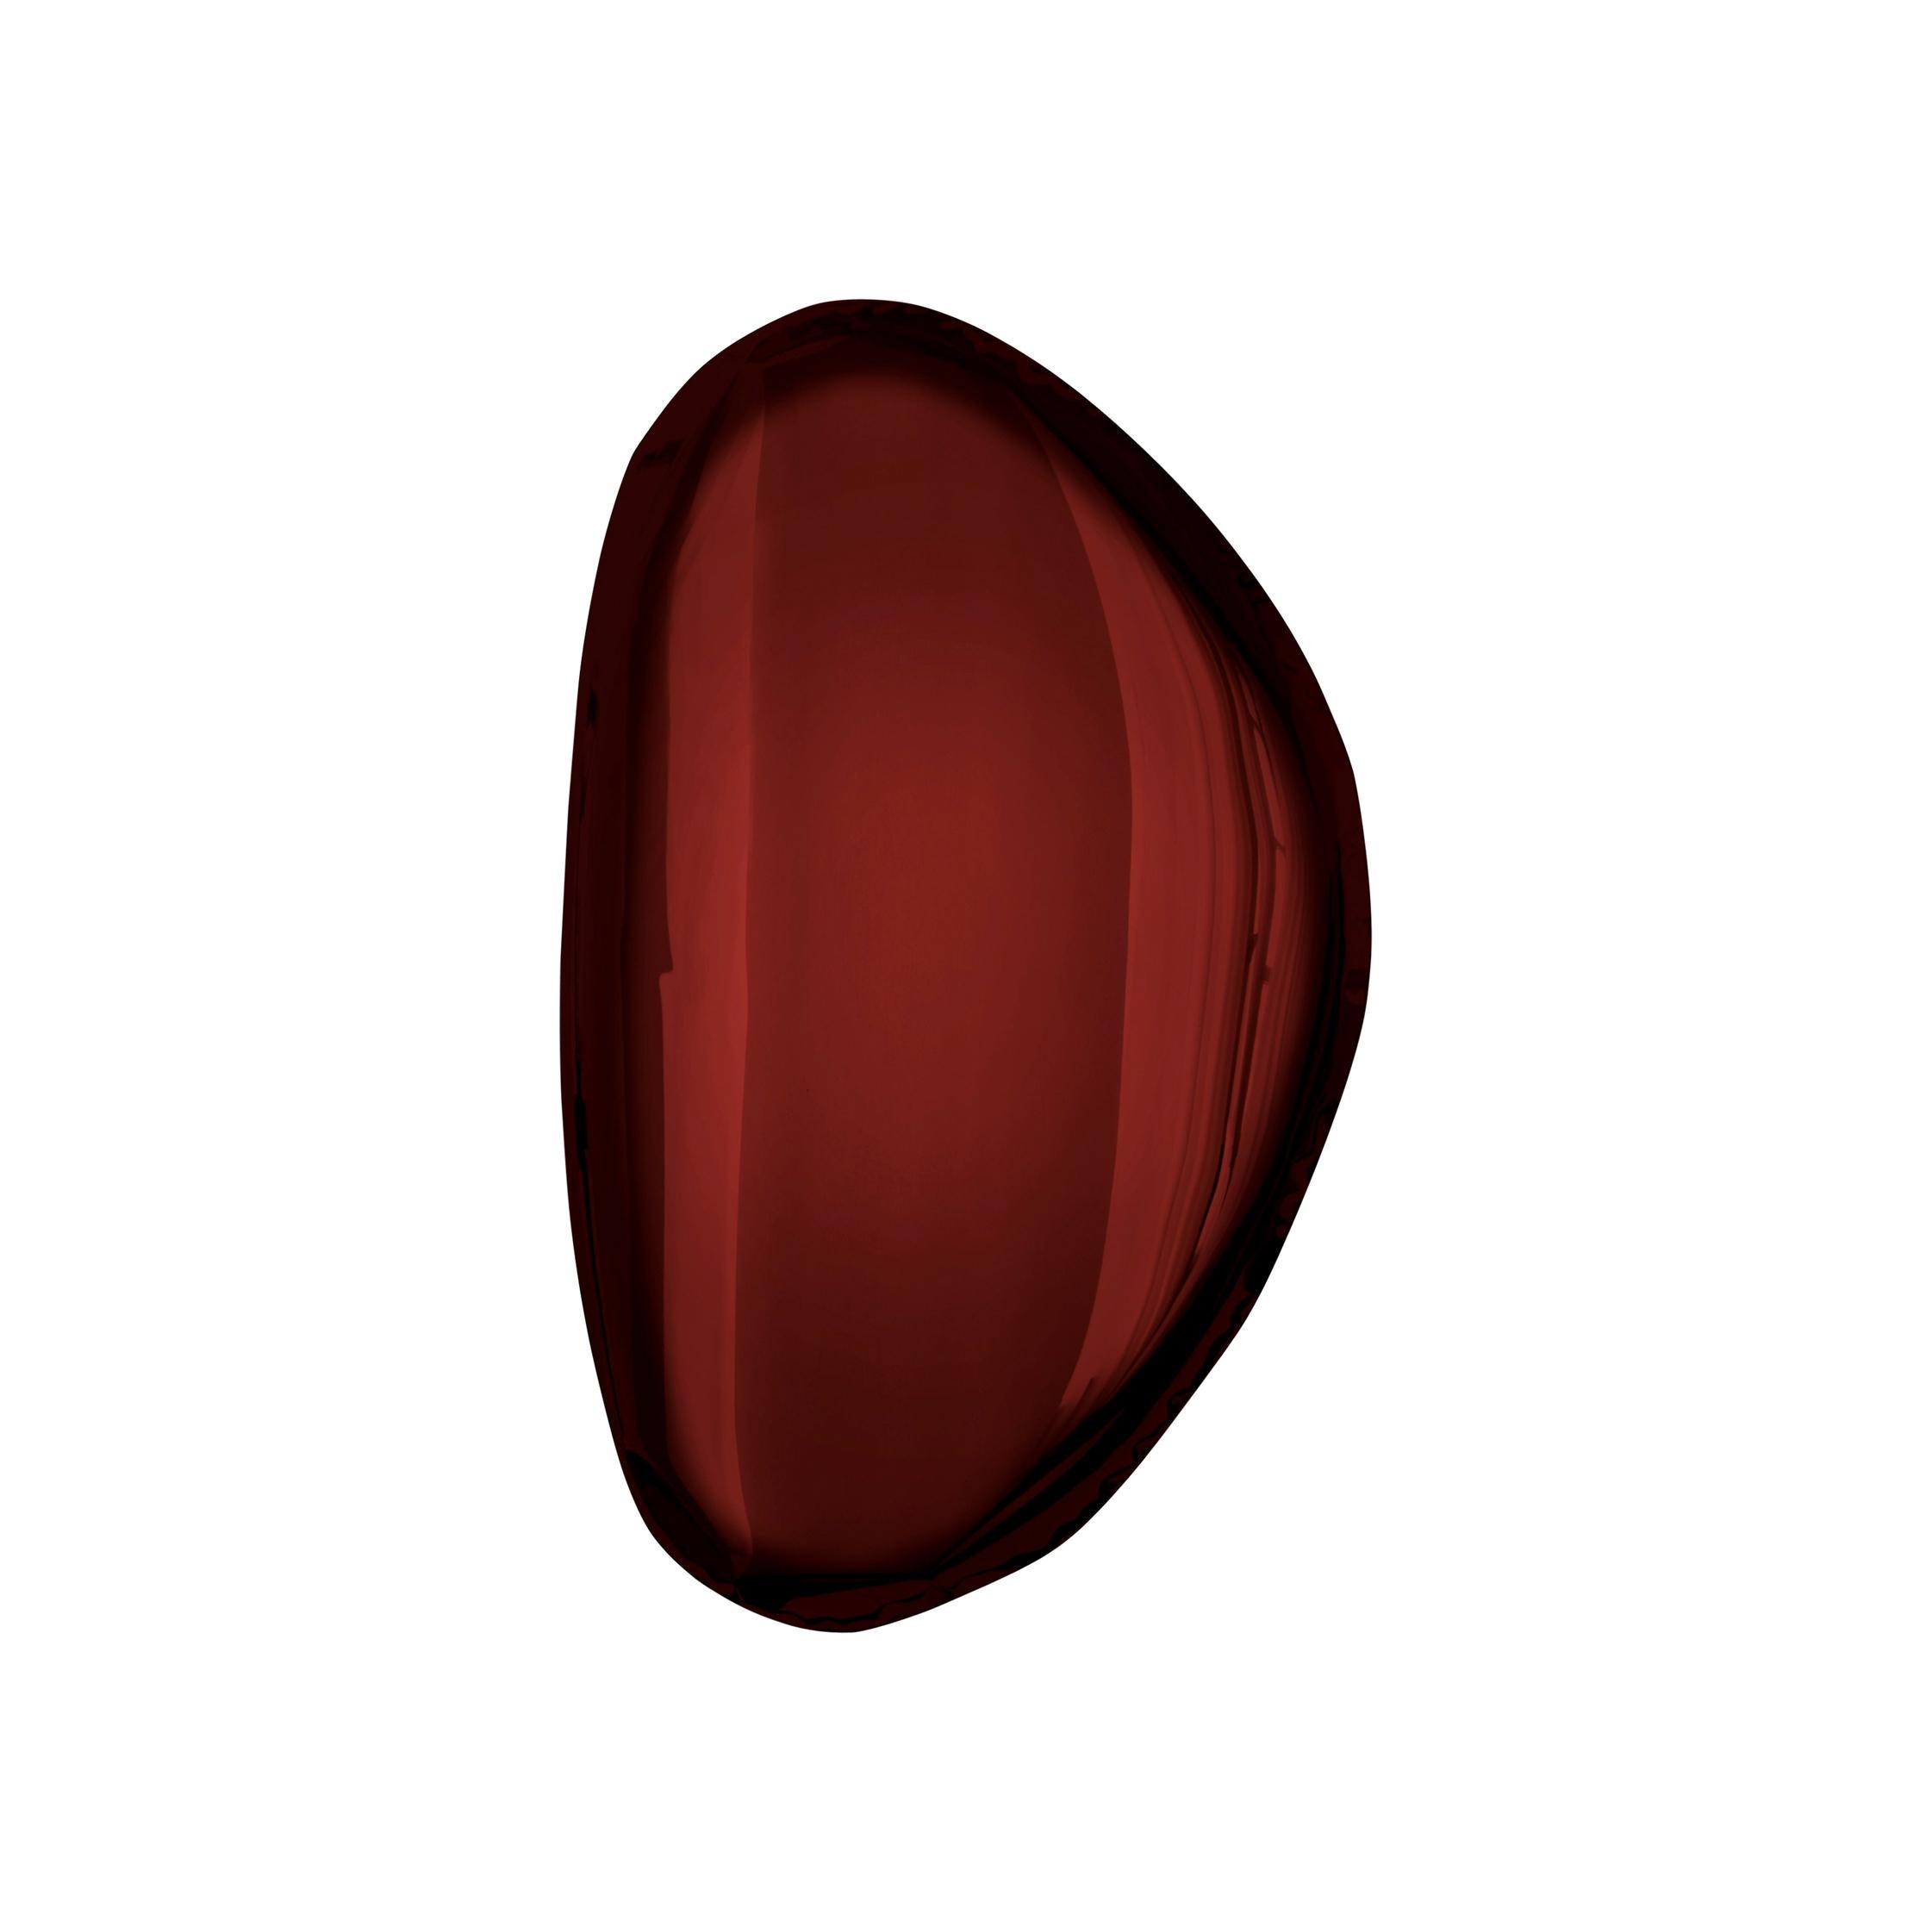 Mirror Tafla O2 Rubin Red, in Polished Stainless Steel by Zieta